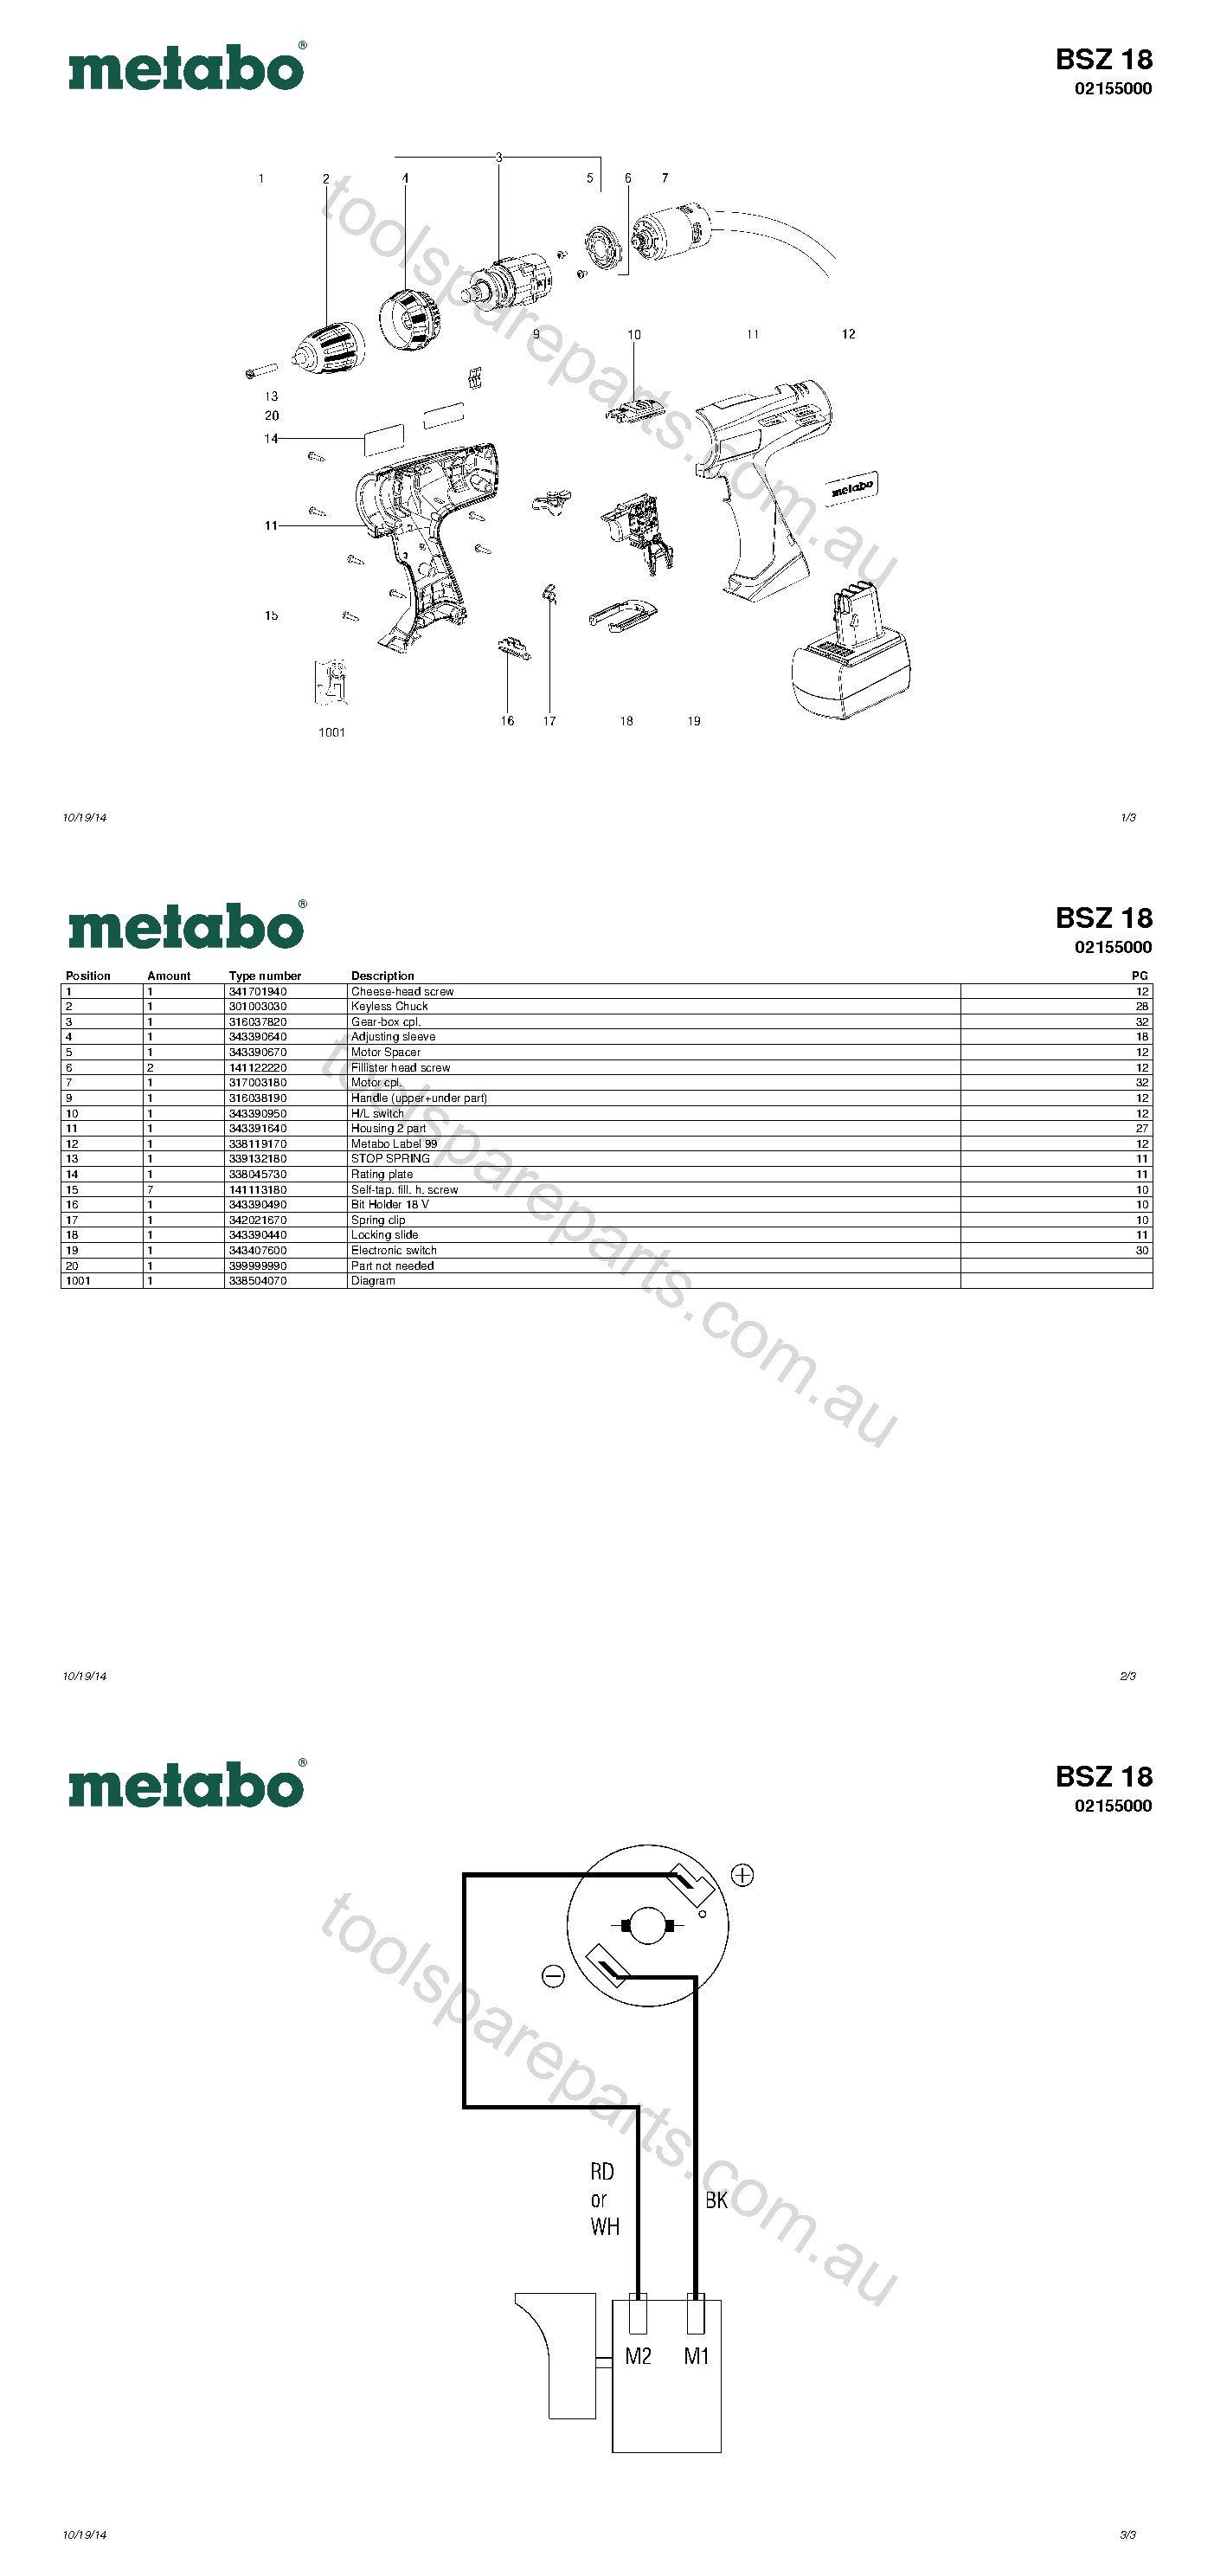 Metabo BSZ 18 02155000  Diagram 1